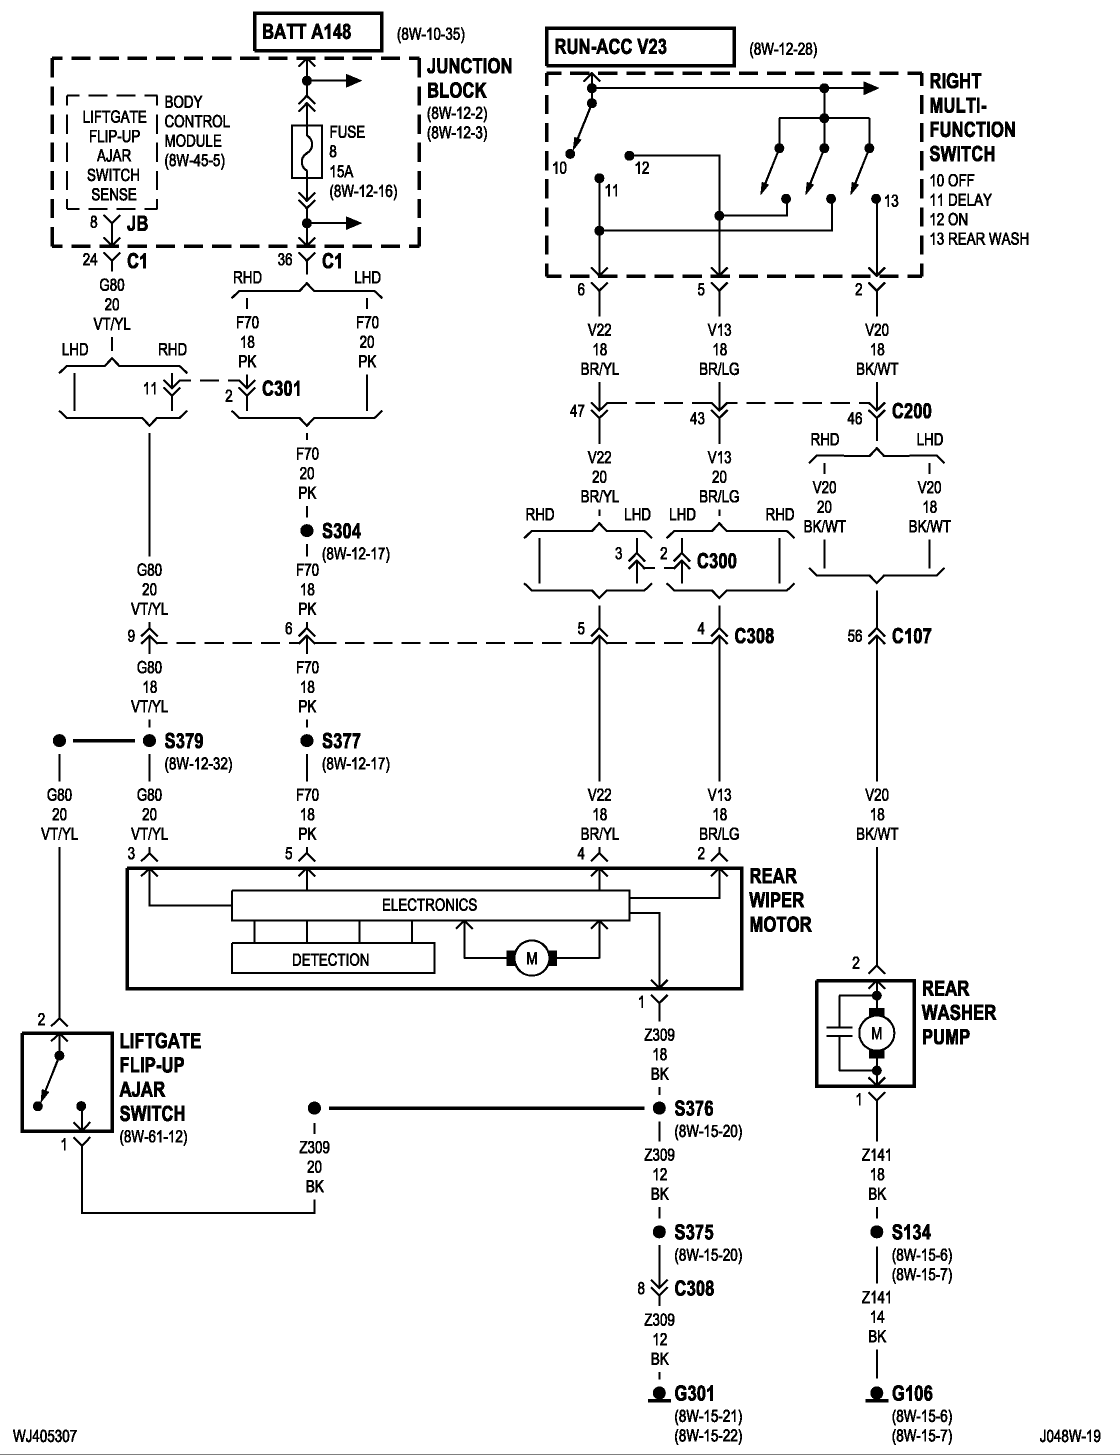 Horn Wiring Diagram
